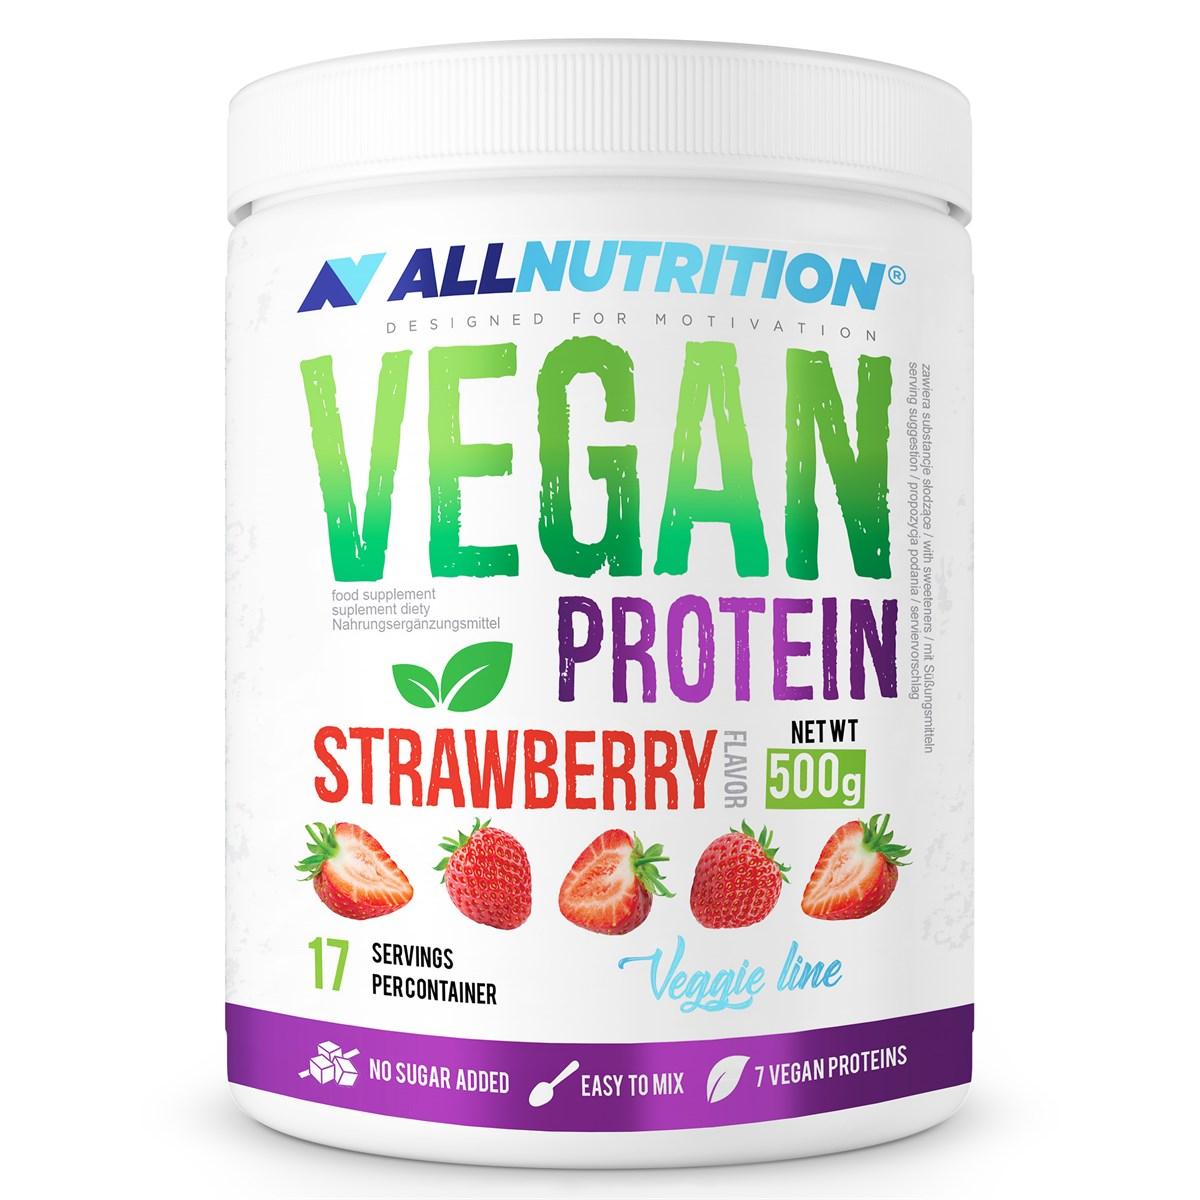 Vegan Protein - 500g Salted Caramel,  мл, AllNutrition. Растительный протеин. 